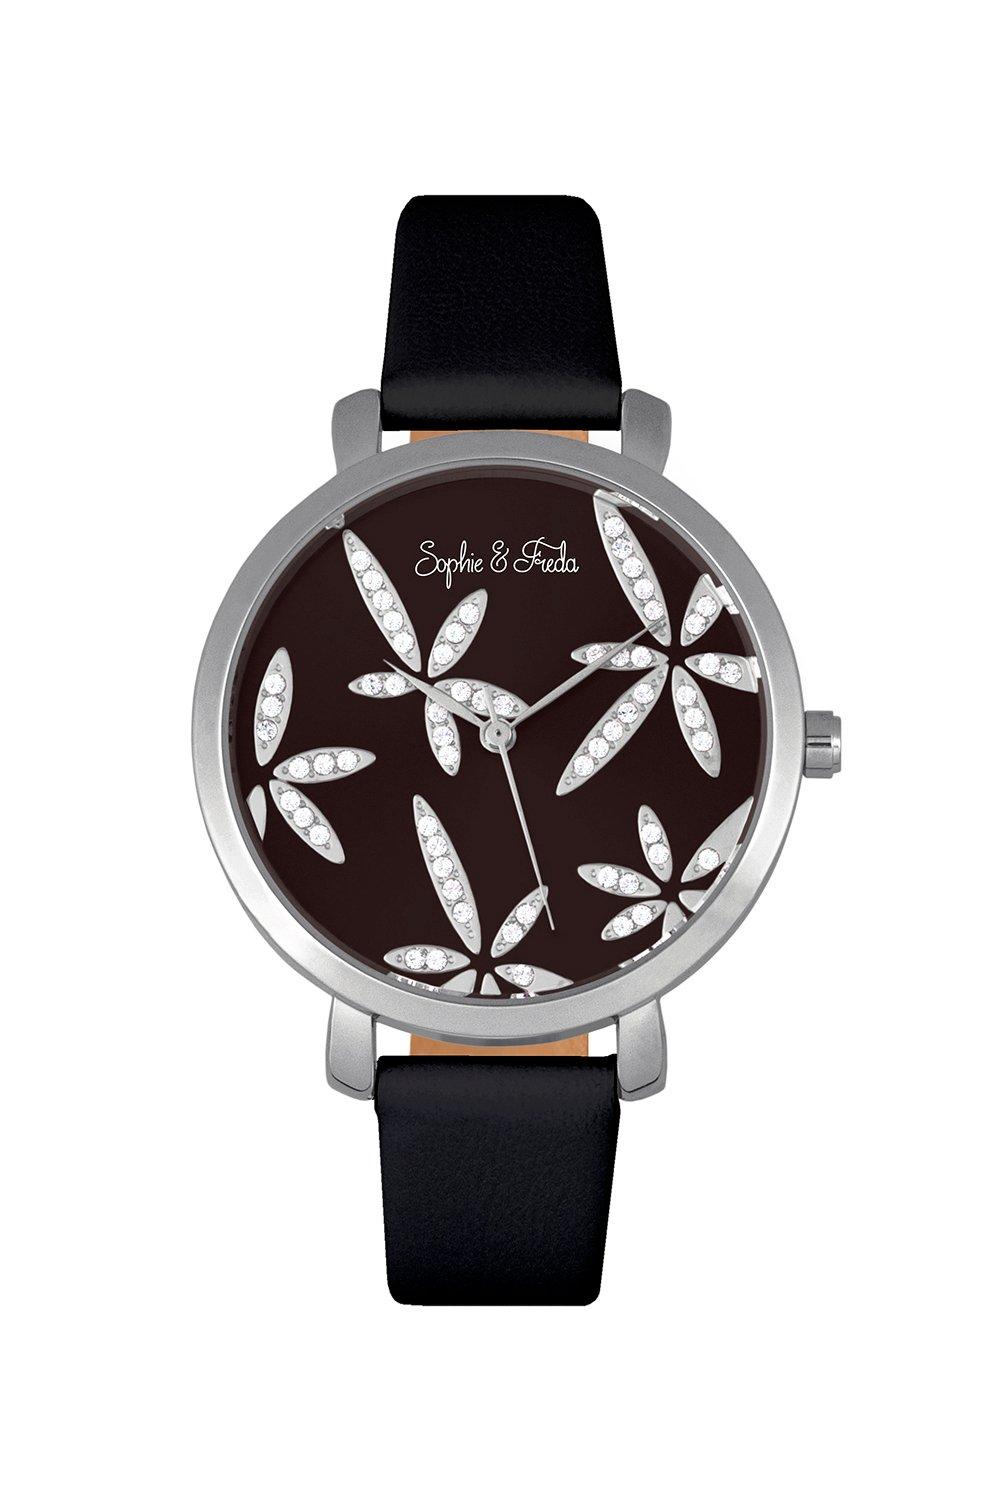 key west leather-band watch with swarovski crystals